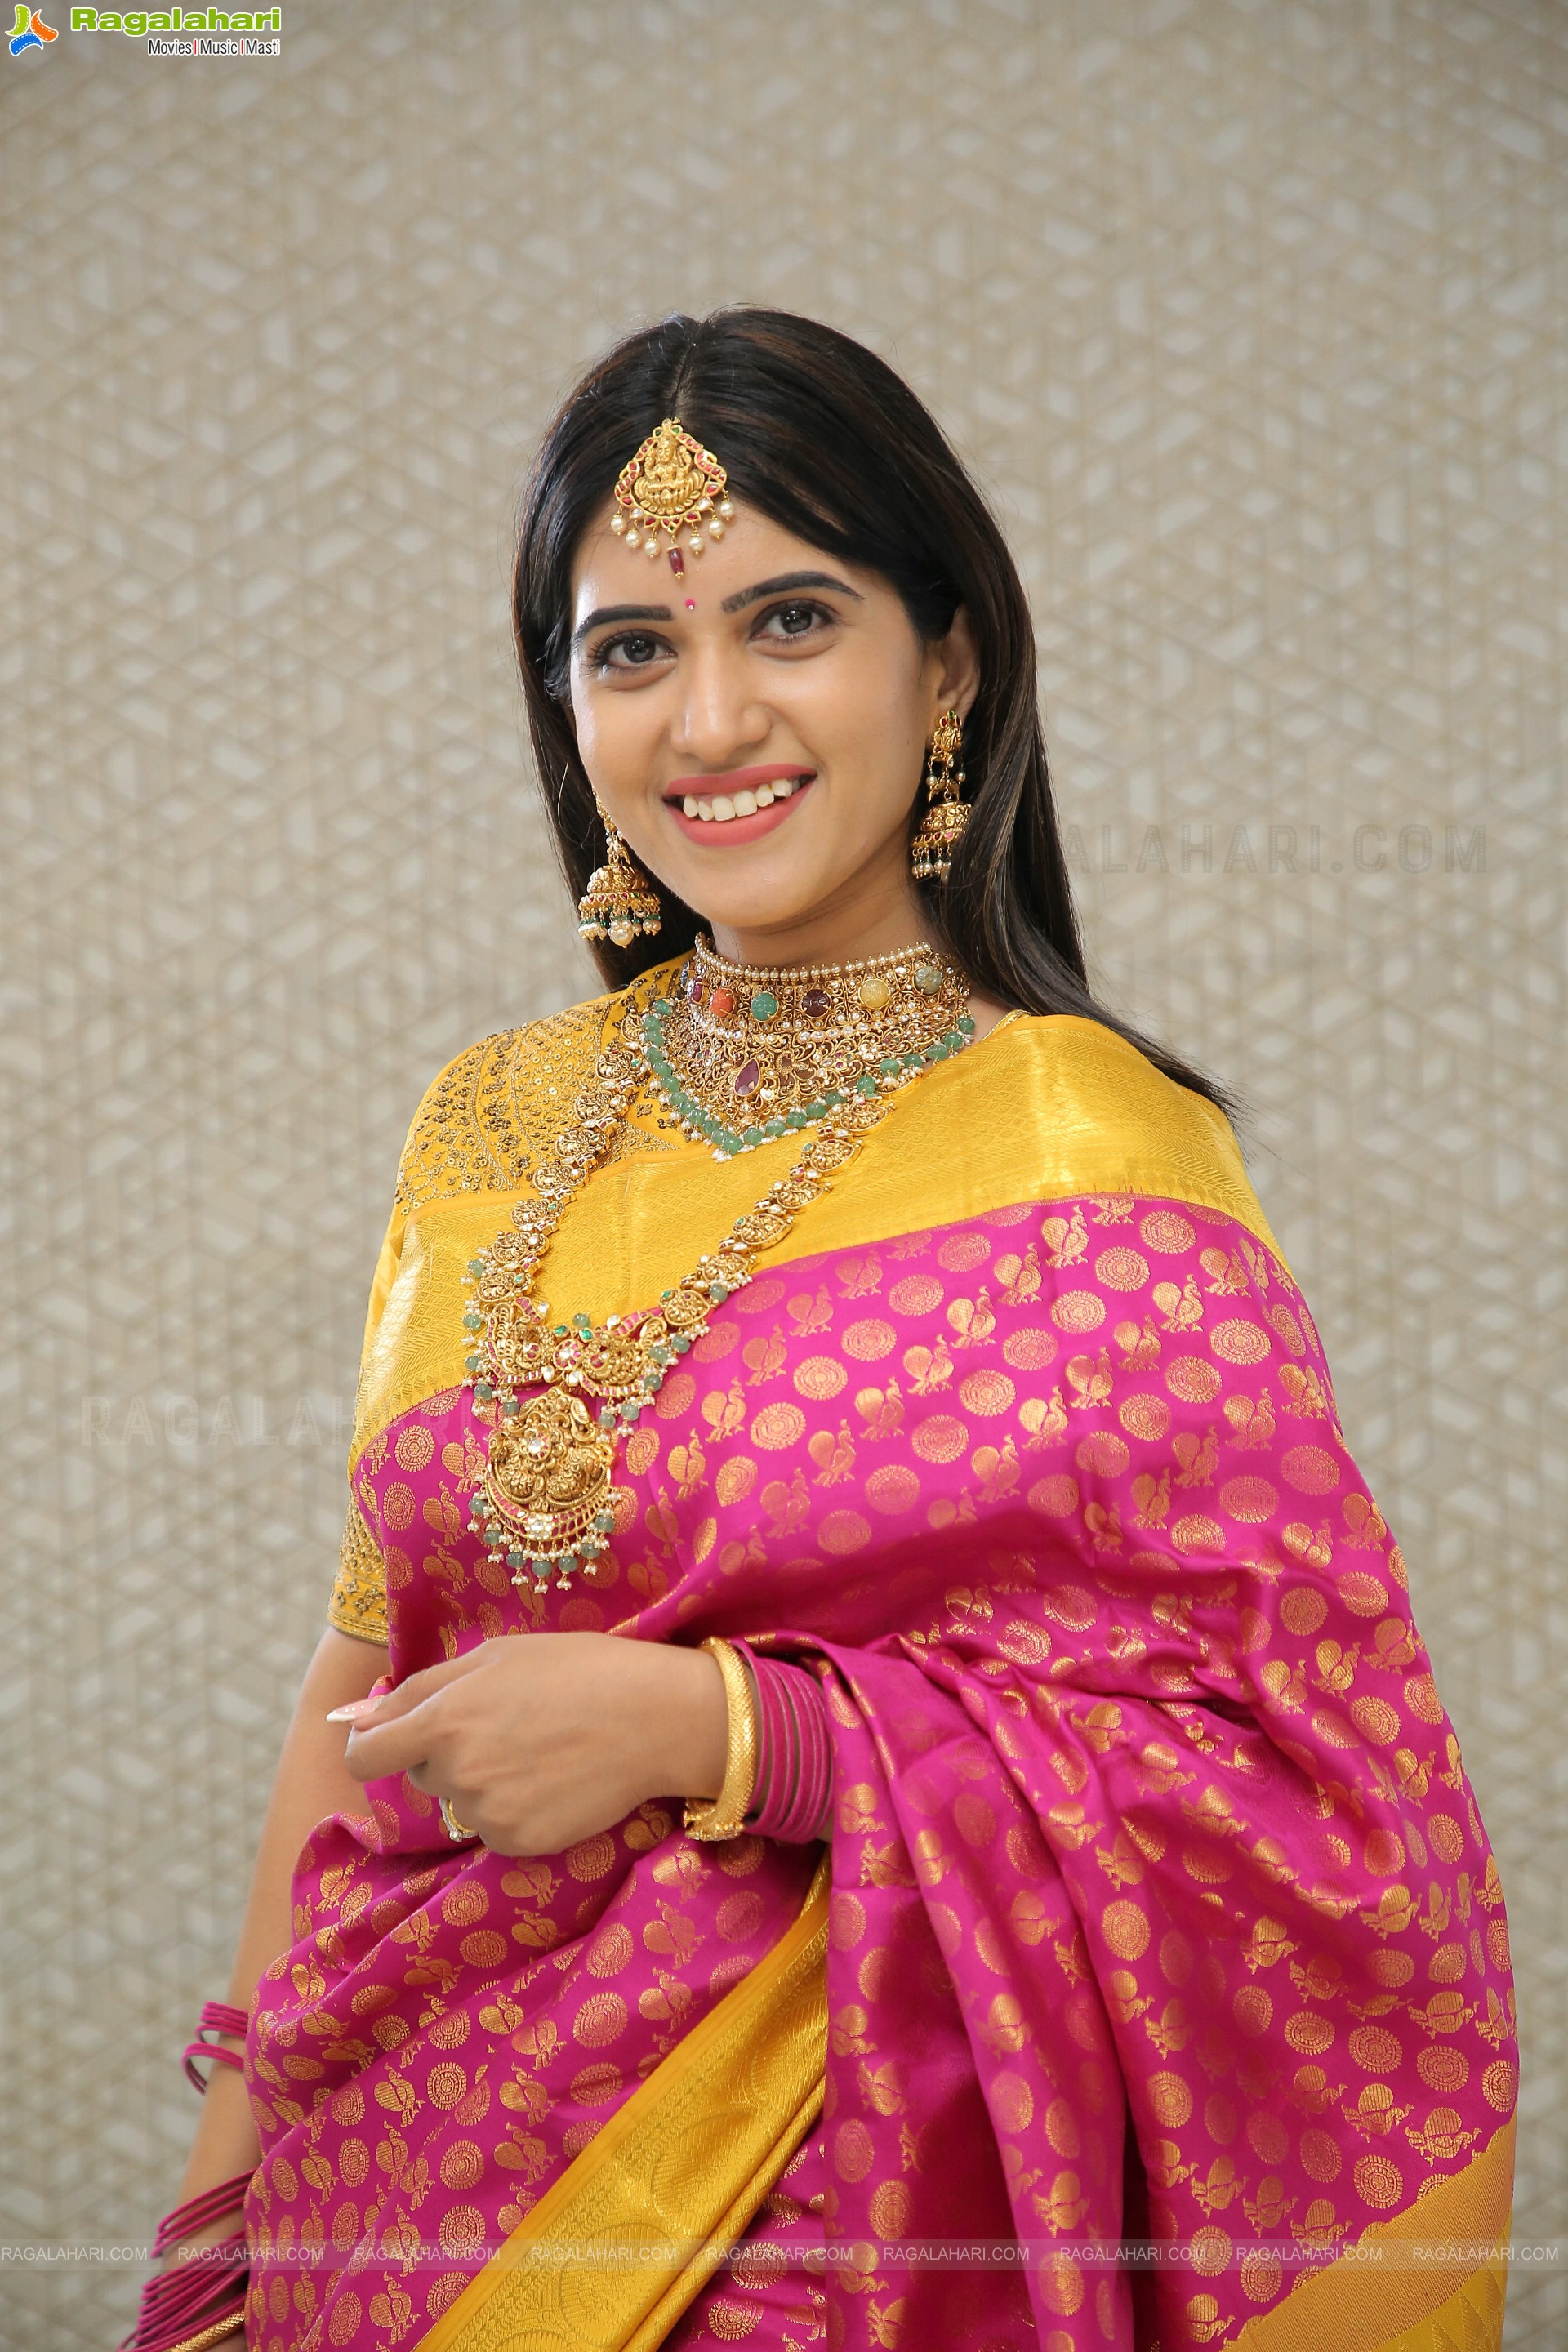 Sravanthi Chokarapu Poses With Jewellery, HD Photo Gallery